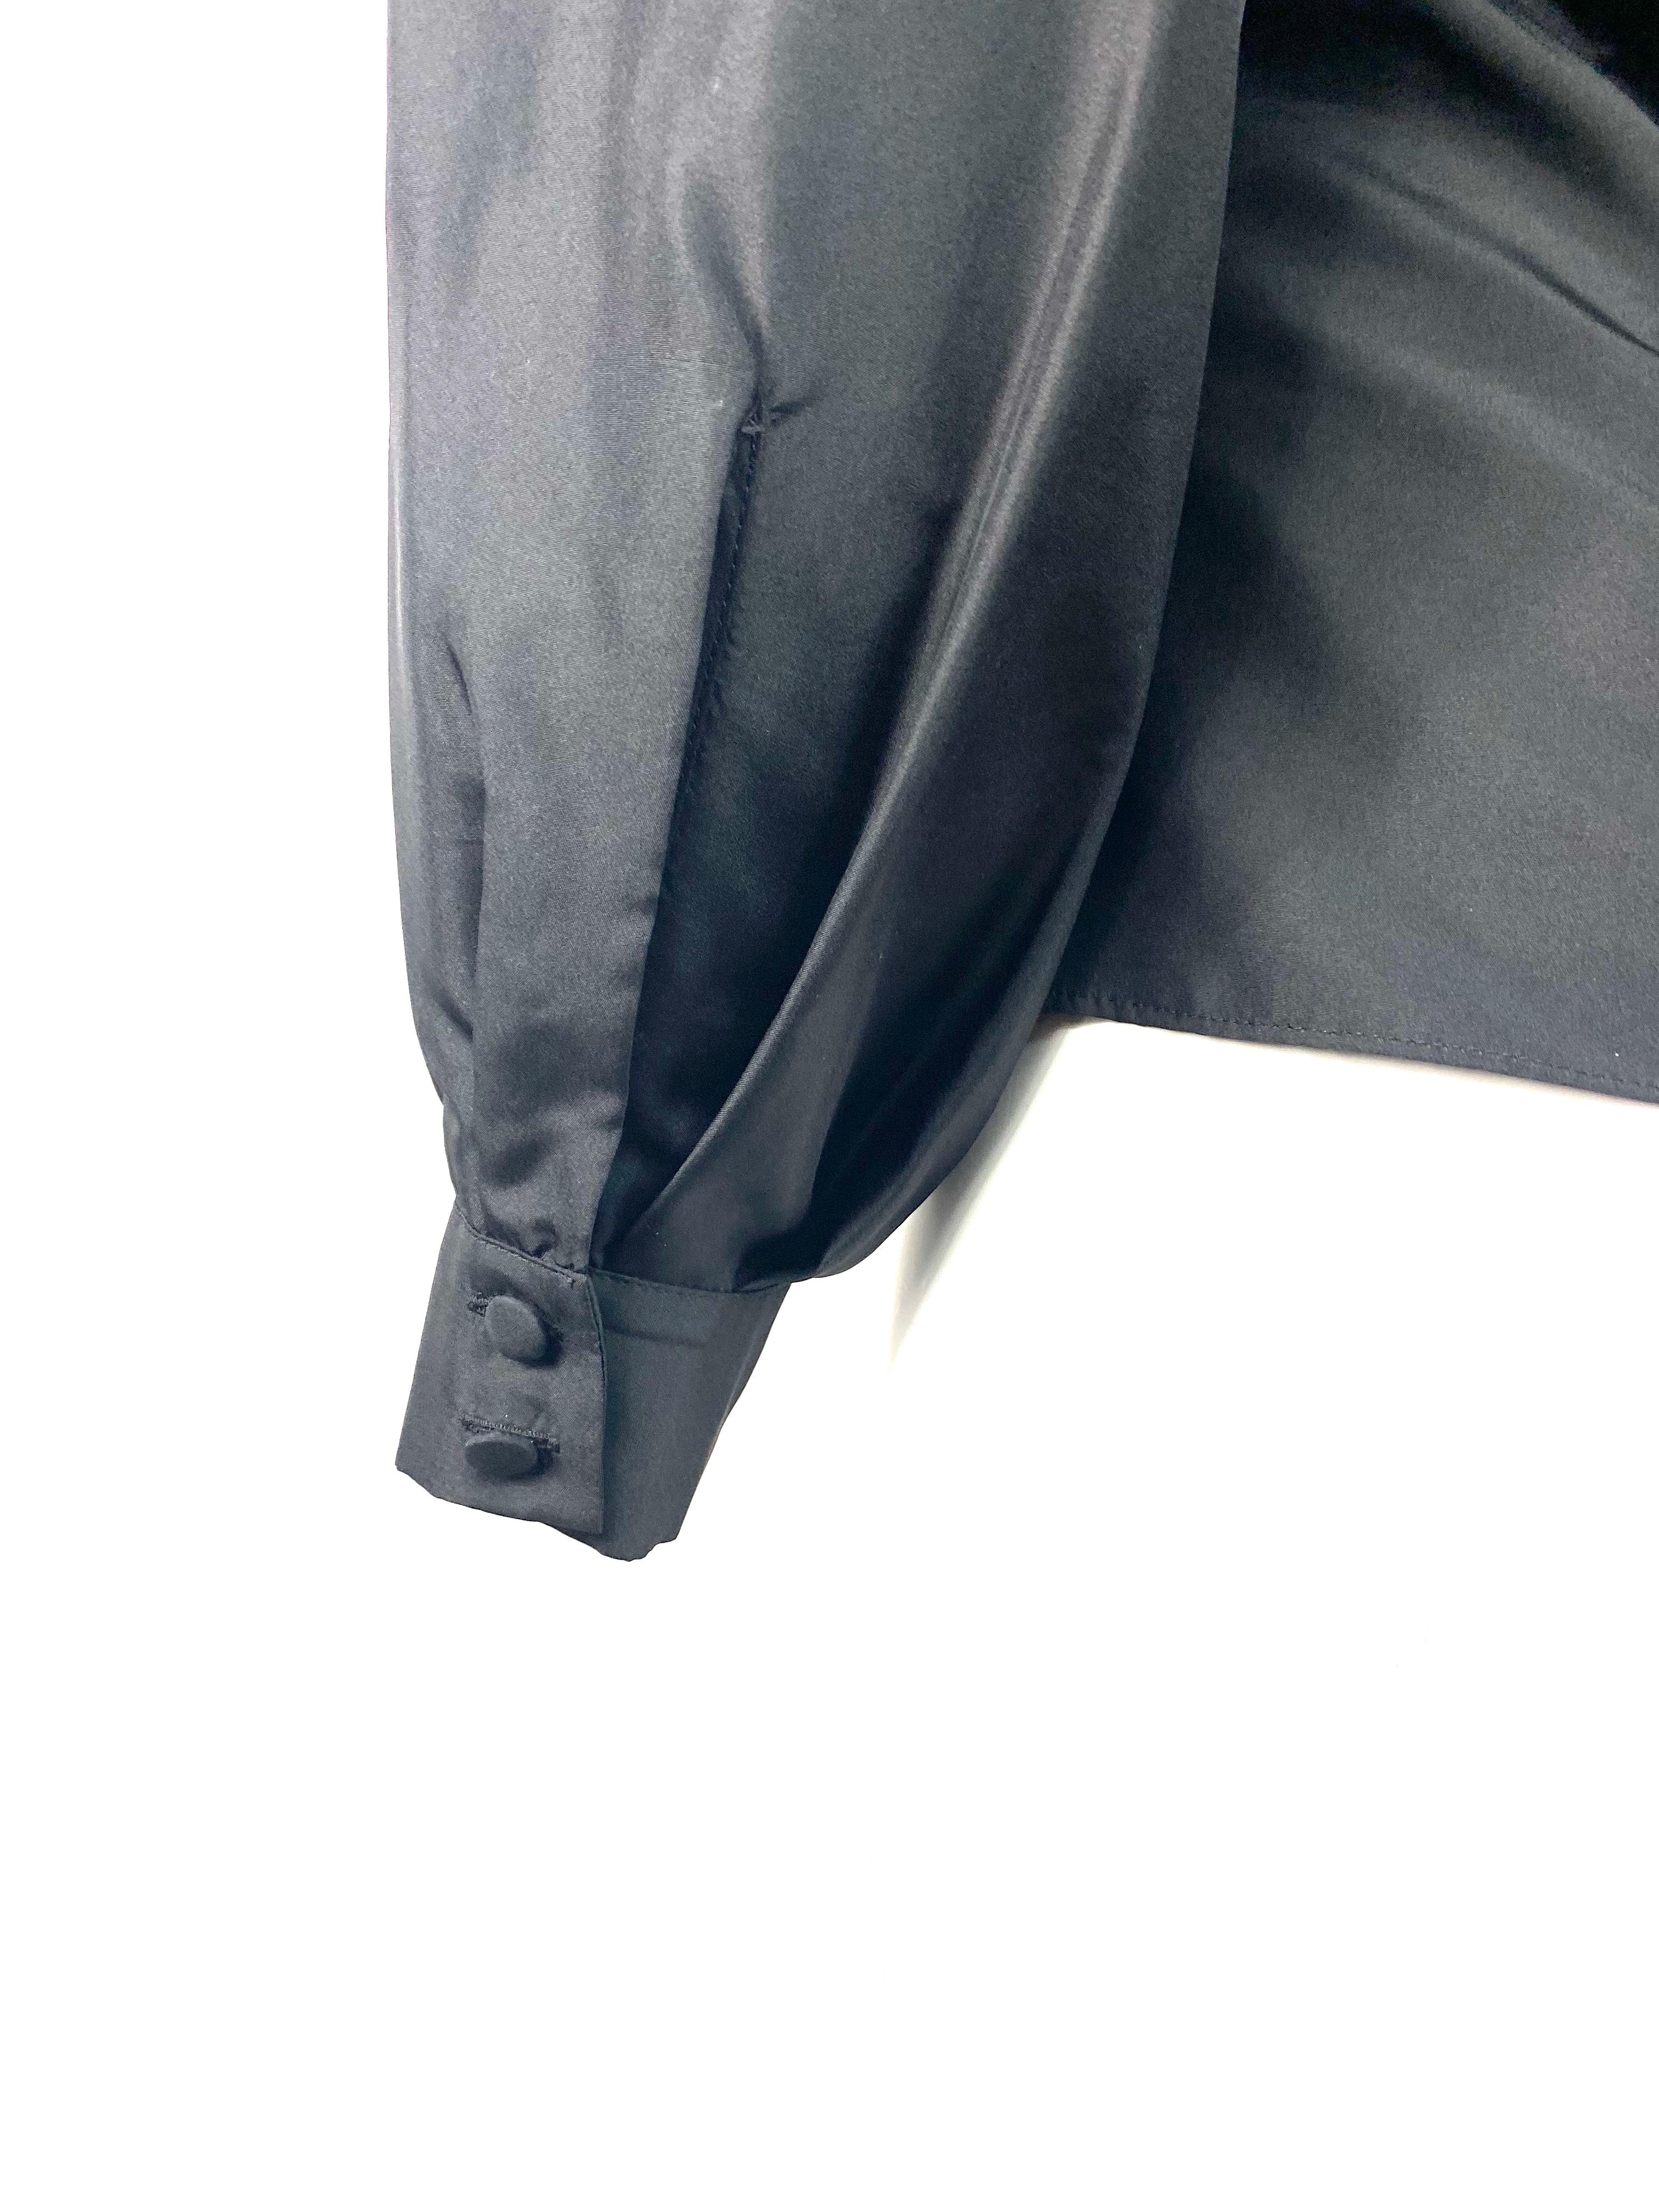 Women's or Men's Deitas Black Silk Balloon Sleeve Blouse Top Size 38 For Sale